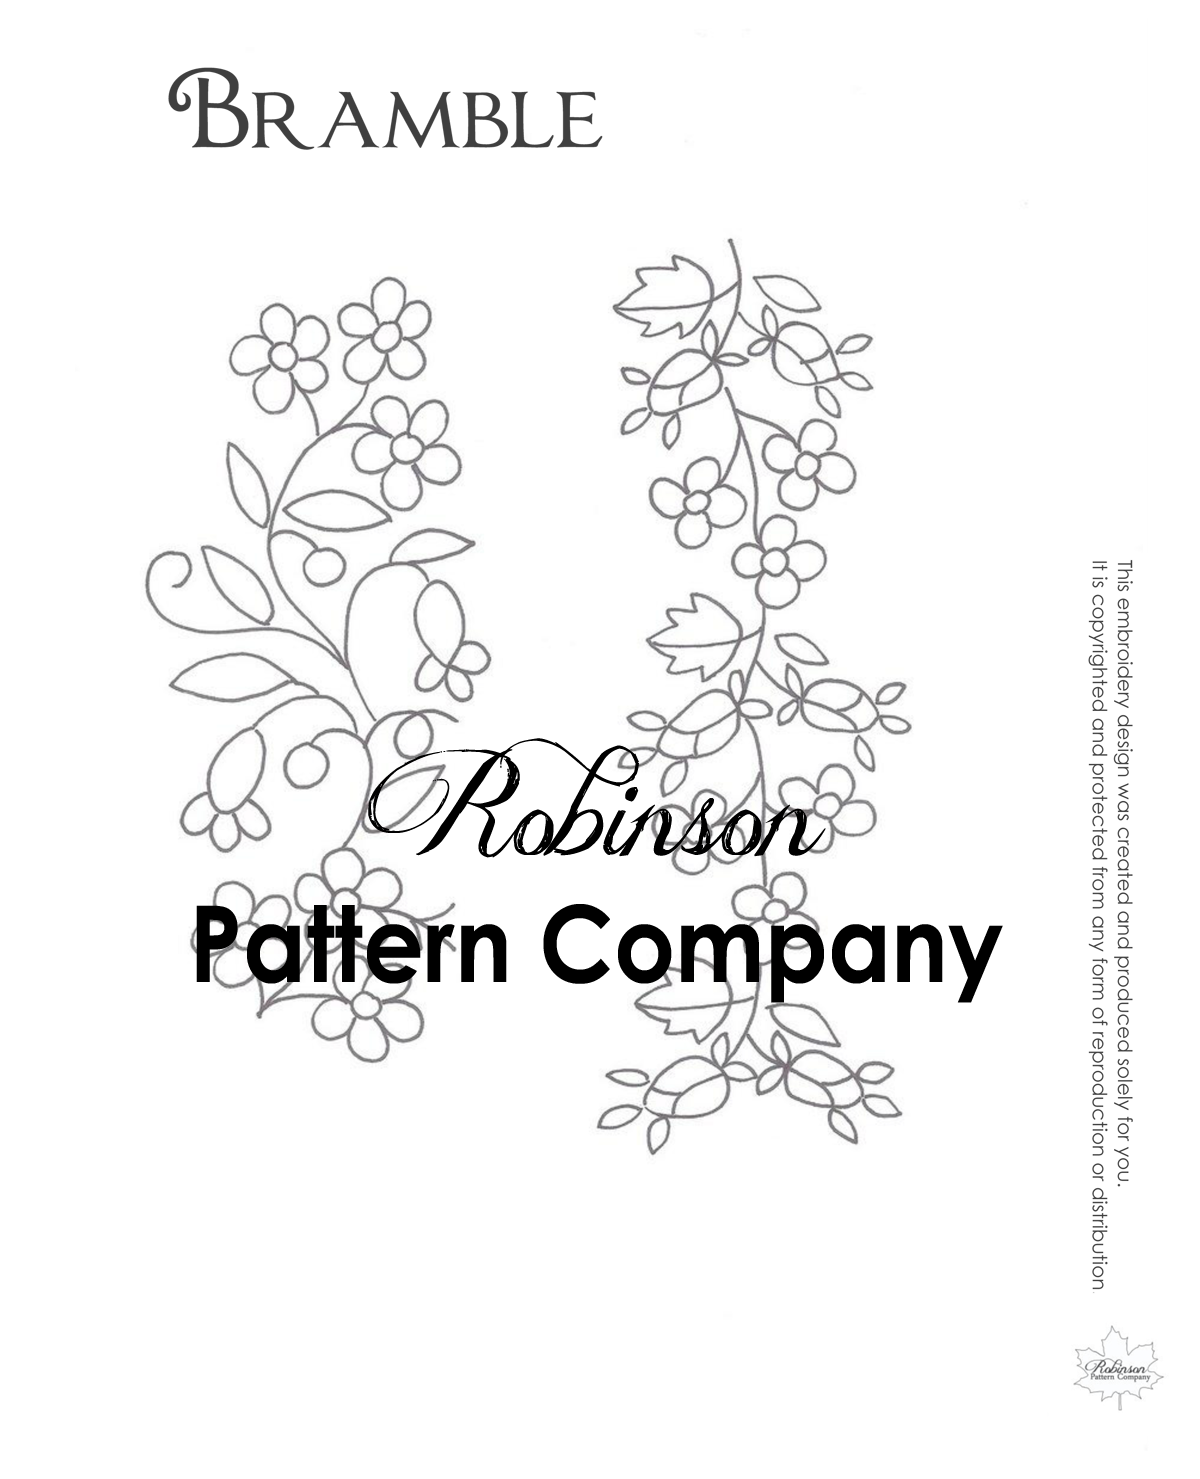 Bramble Hand Embroidery pattern